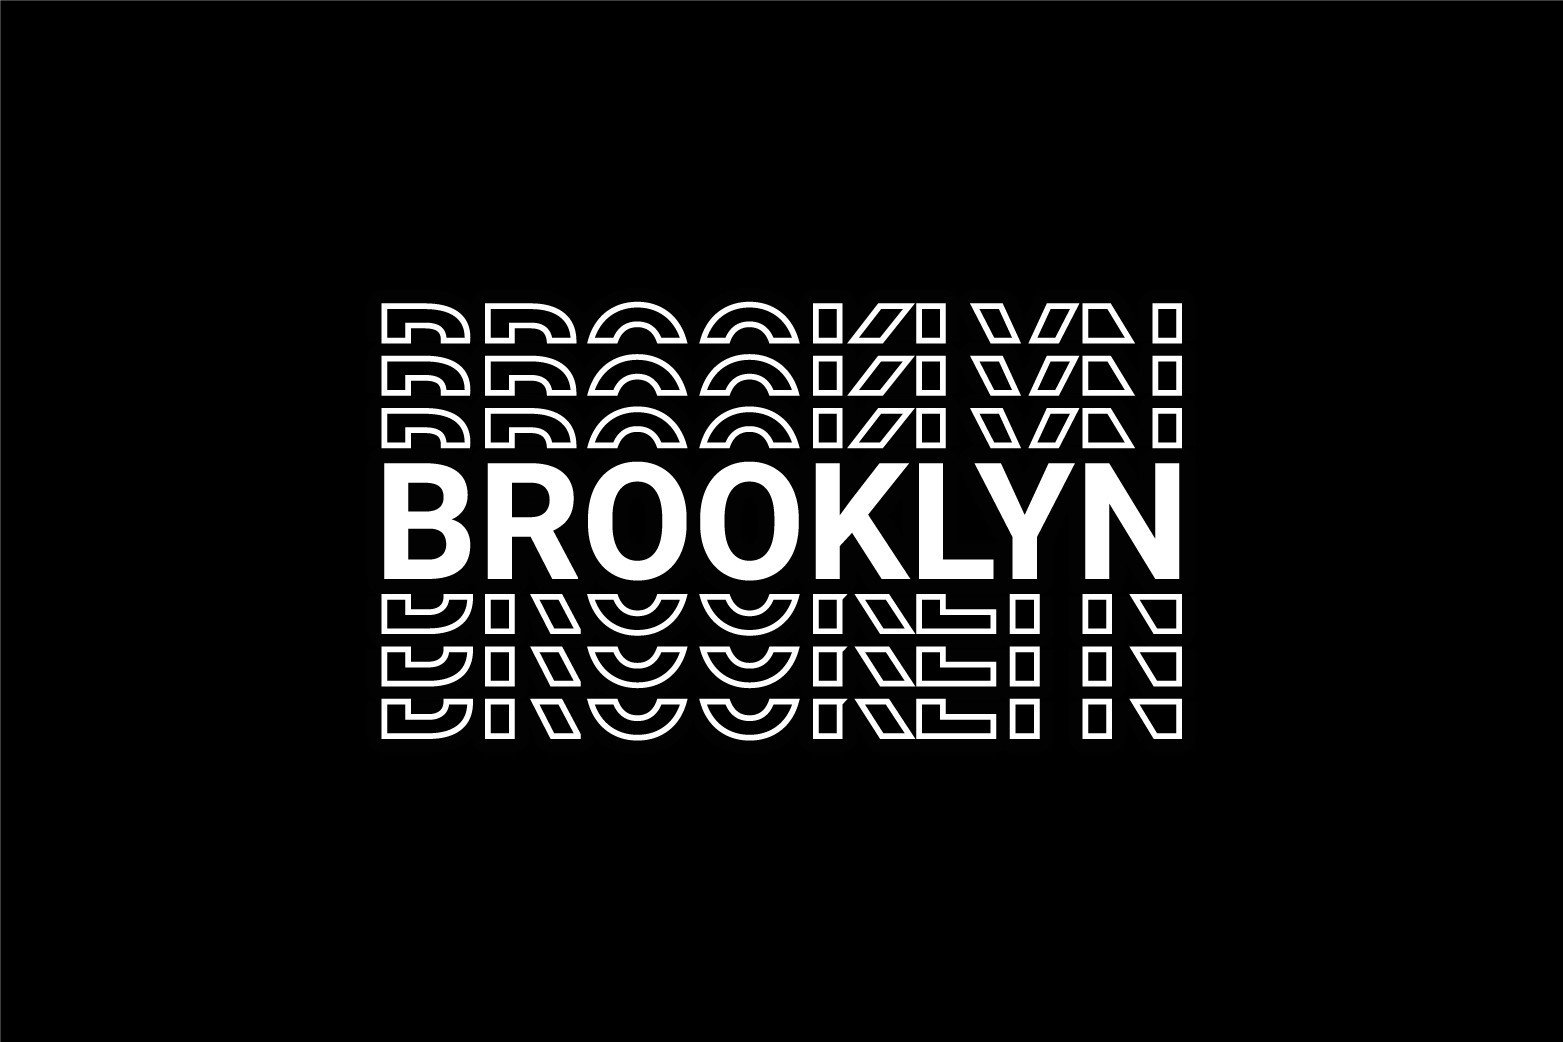 Brooklyn Writing Graphic by devinvervena1 · Creative Fabrica